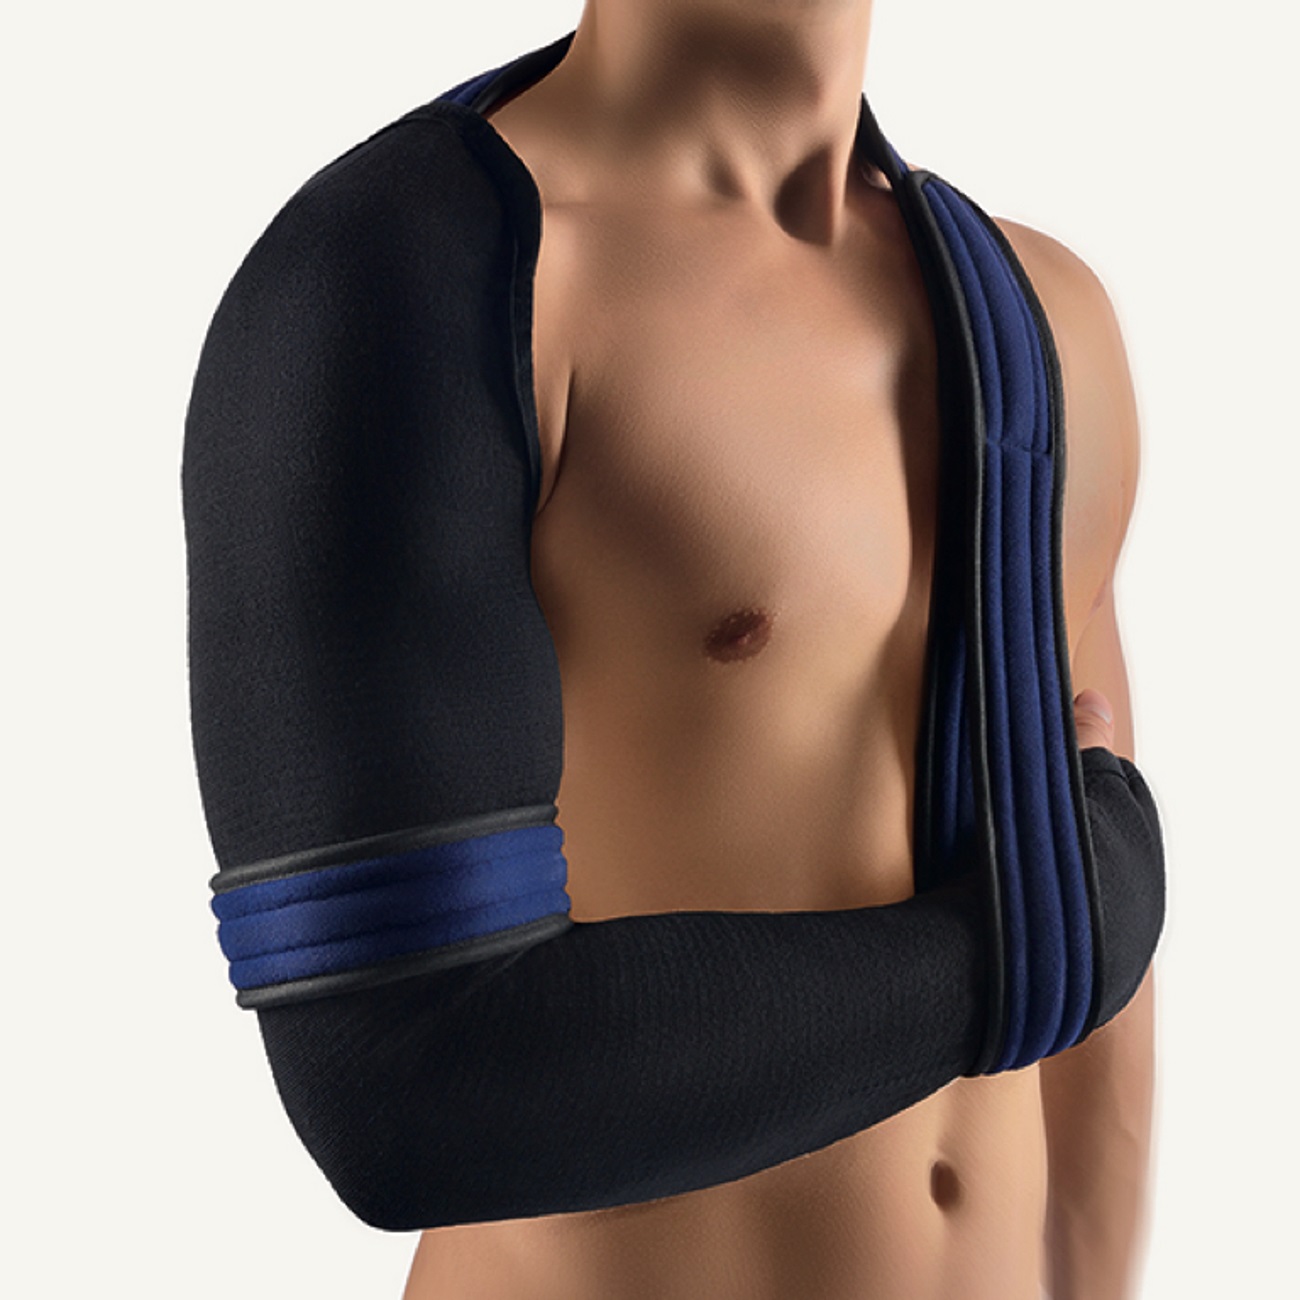 Schulter-Arm-Bandage OmoBasic nach Gilchrist geschlossene Form